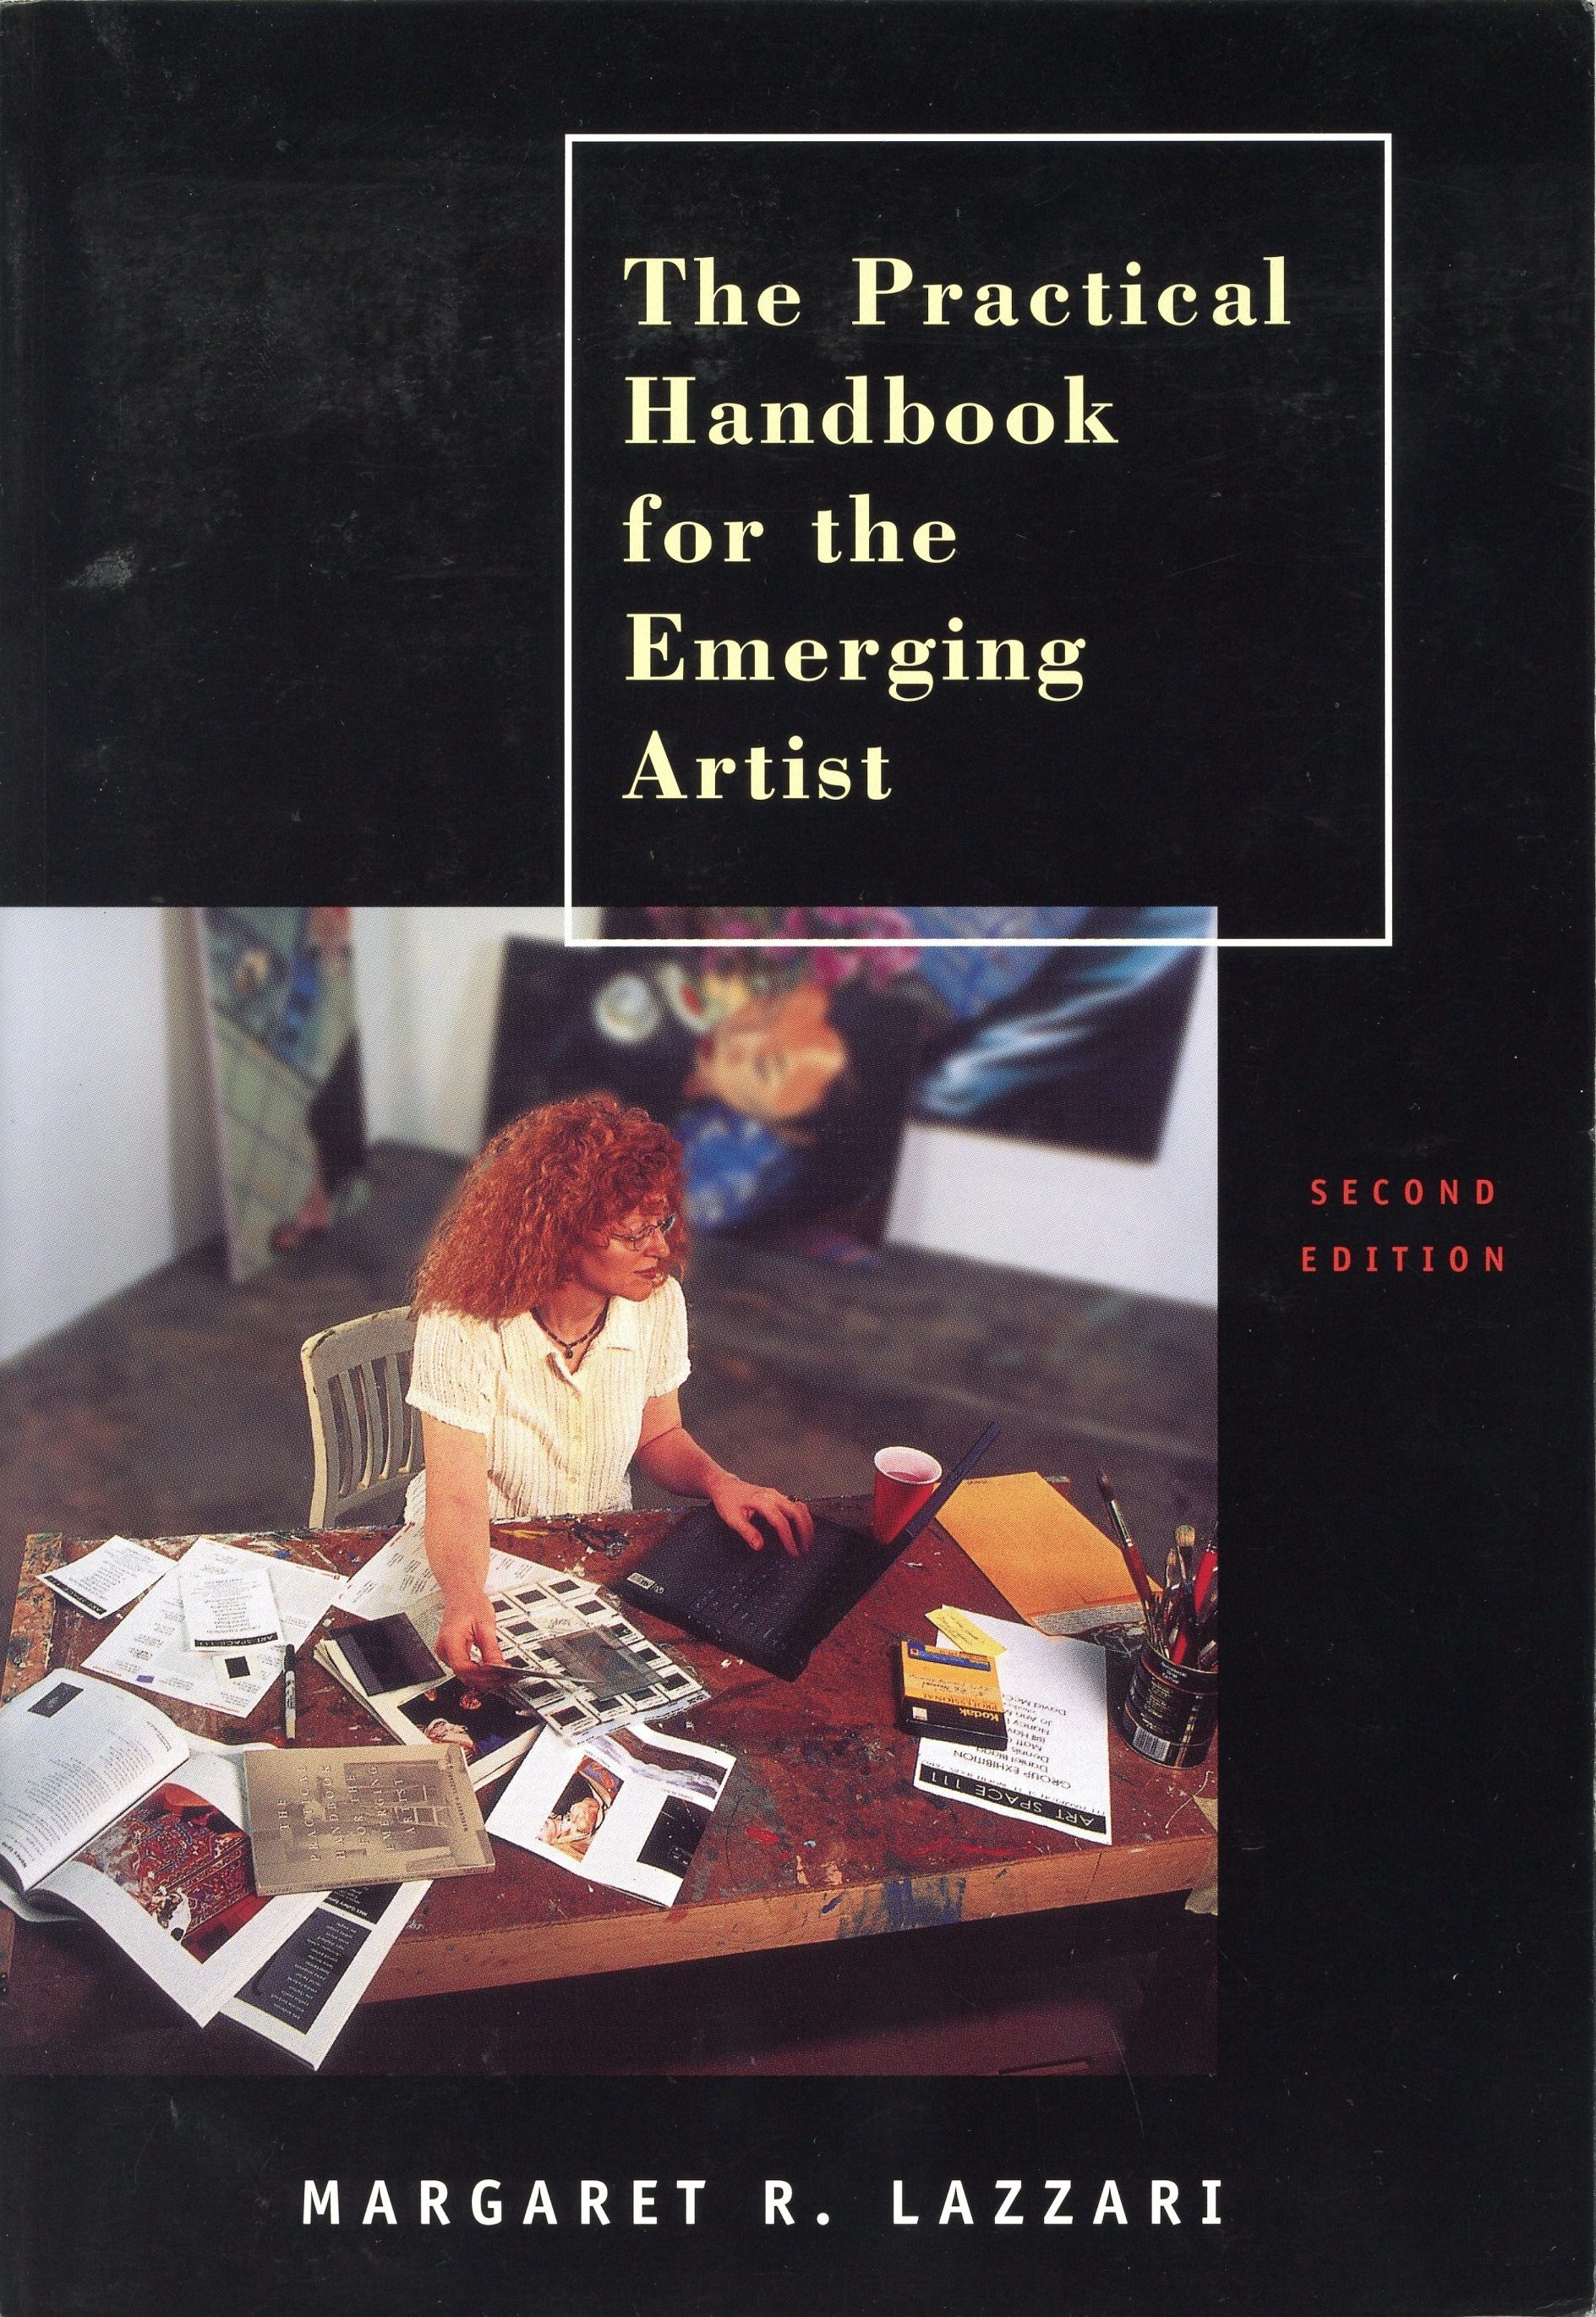 Practical handbook cover-2.jpg